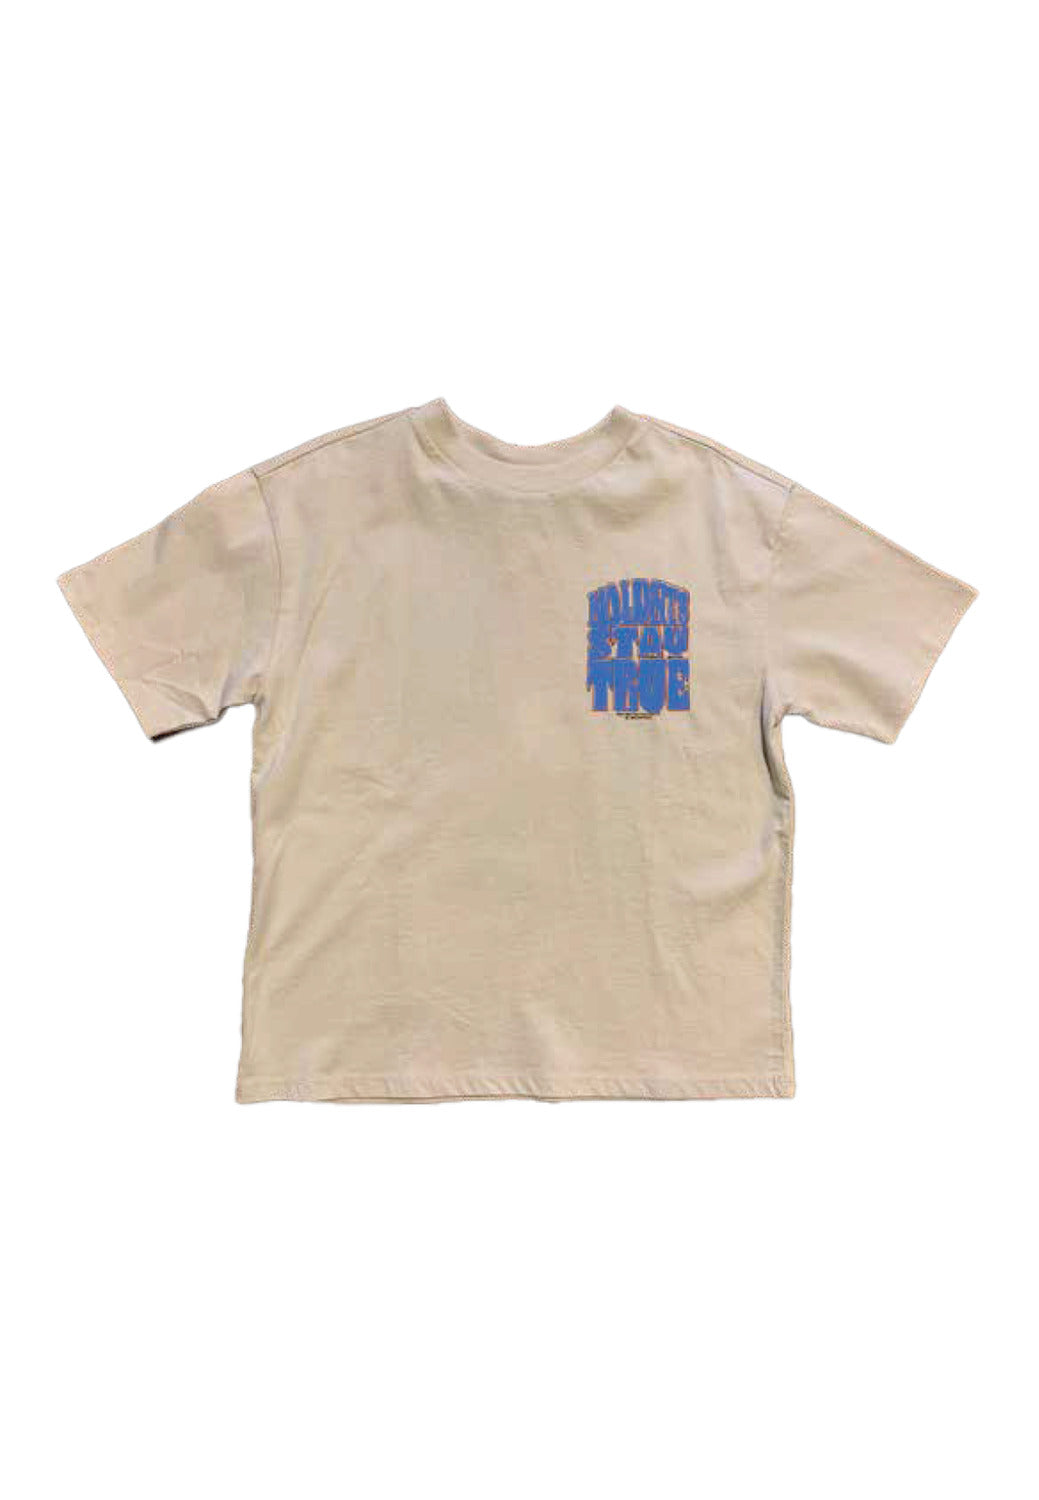 NKMHENREKKE T-Shirts & Tops - Brown Rice